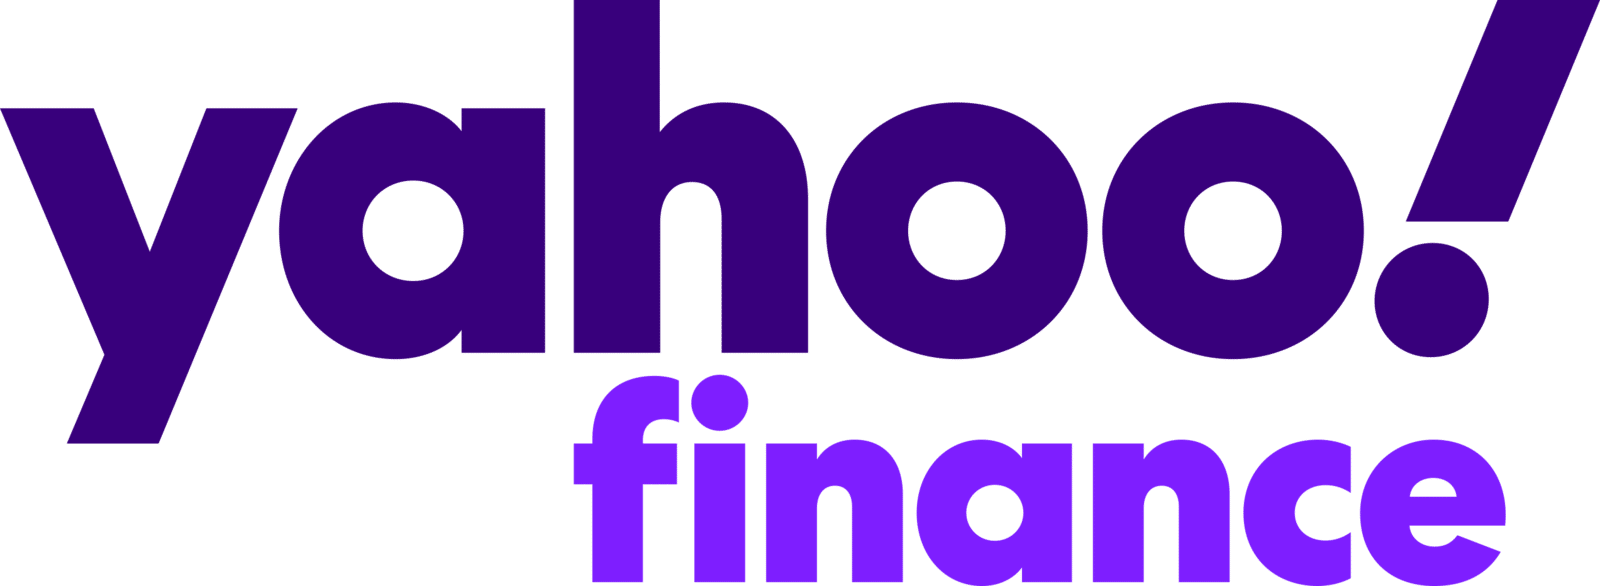 free stock charting: yahoo finance